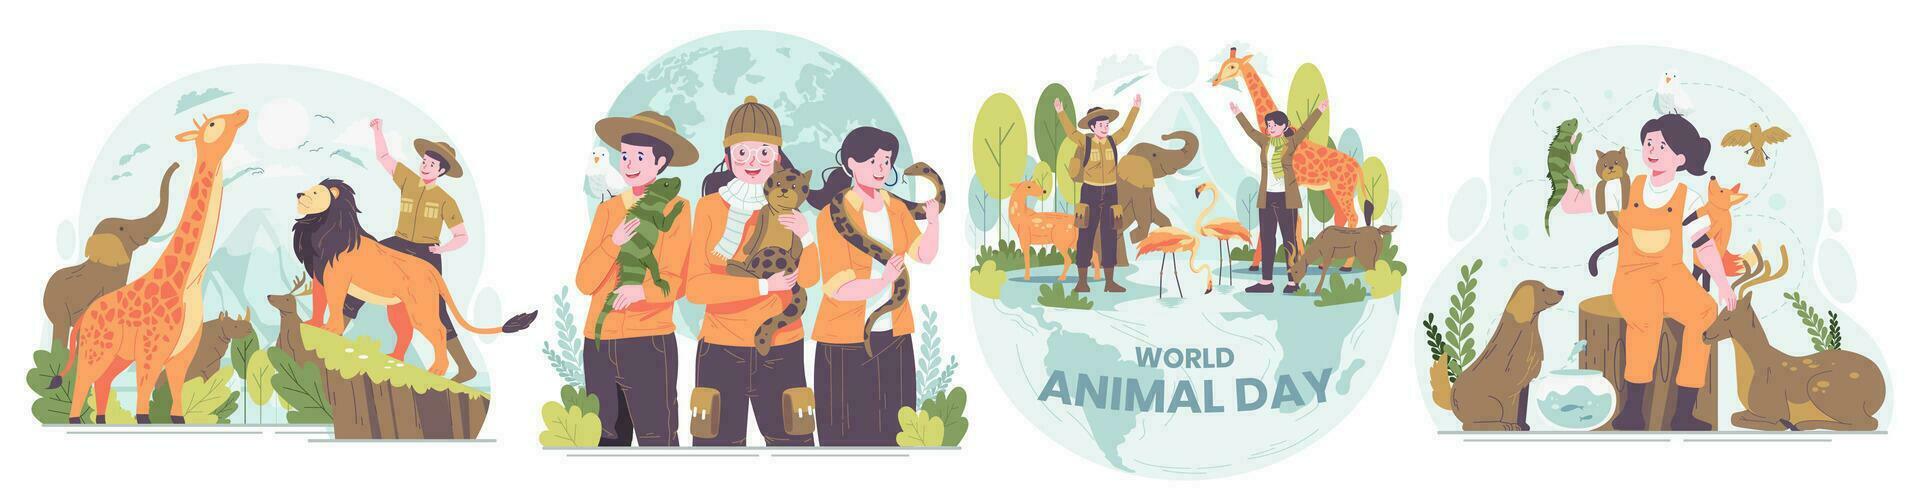 Illustration Set of World Animal Day, Wildlife Day, Animals on the planet, Animals around the world vector